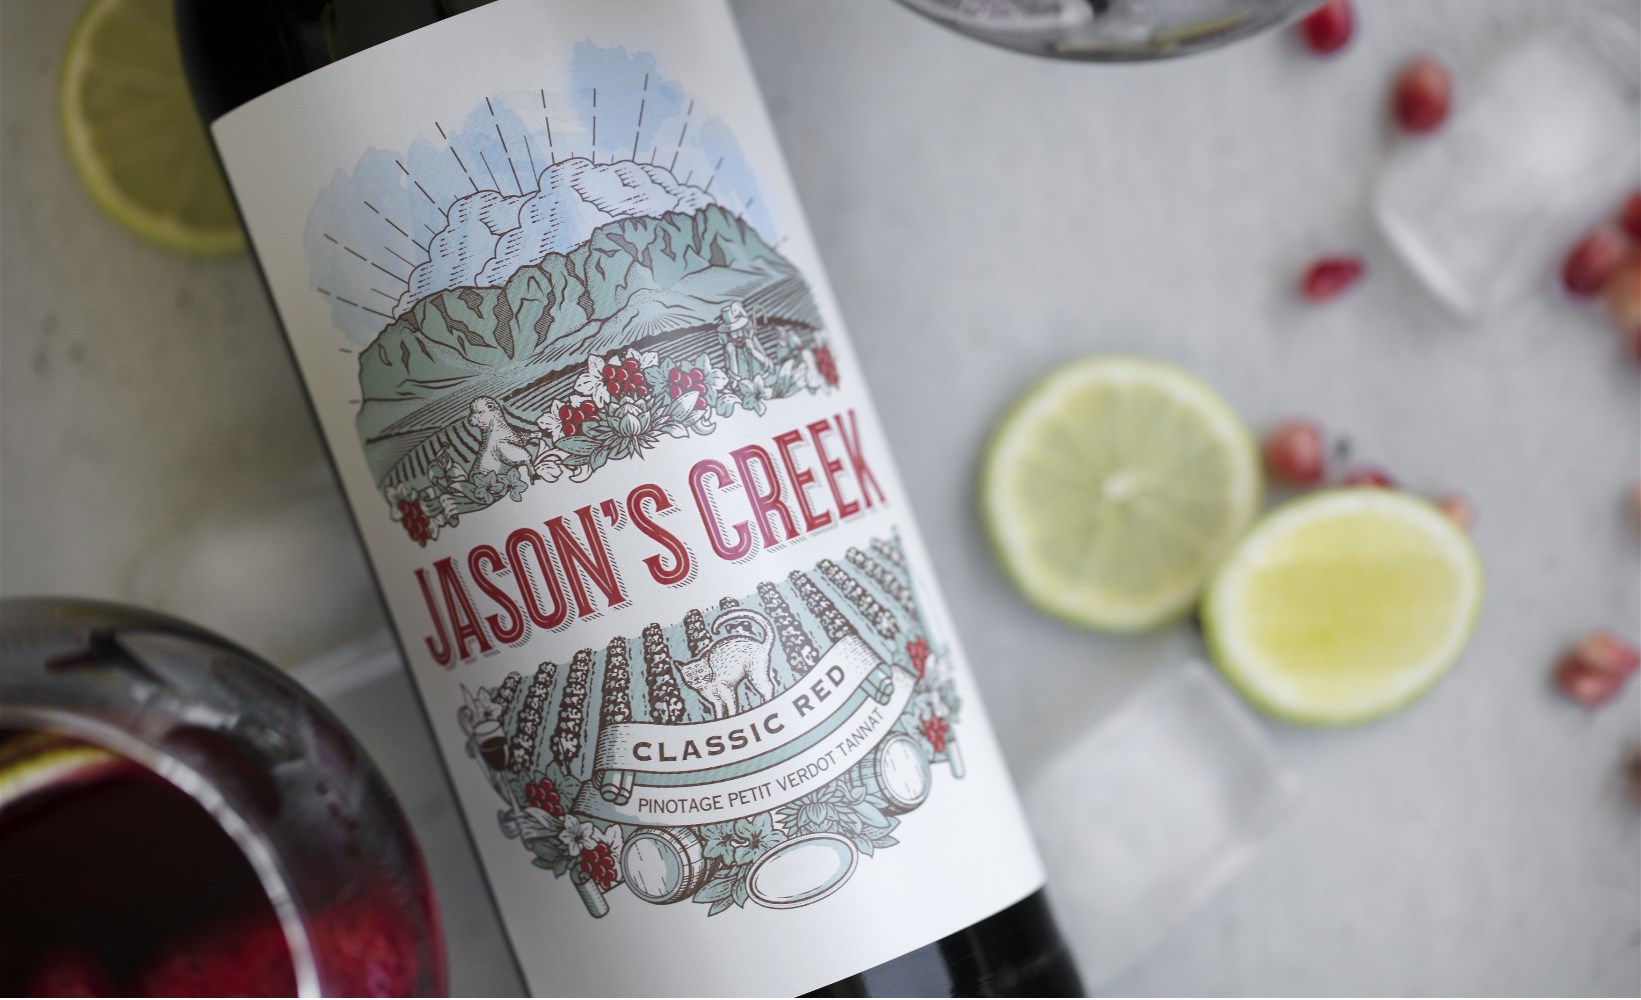 Wine Crush Wednesday: Jason's Creek Cape Blend 2